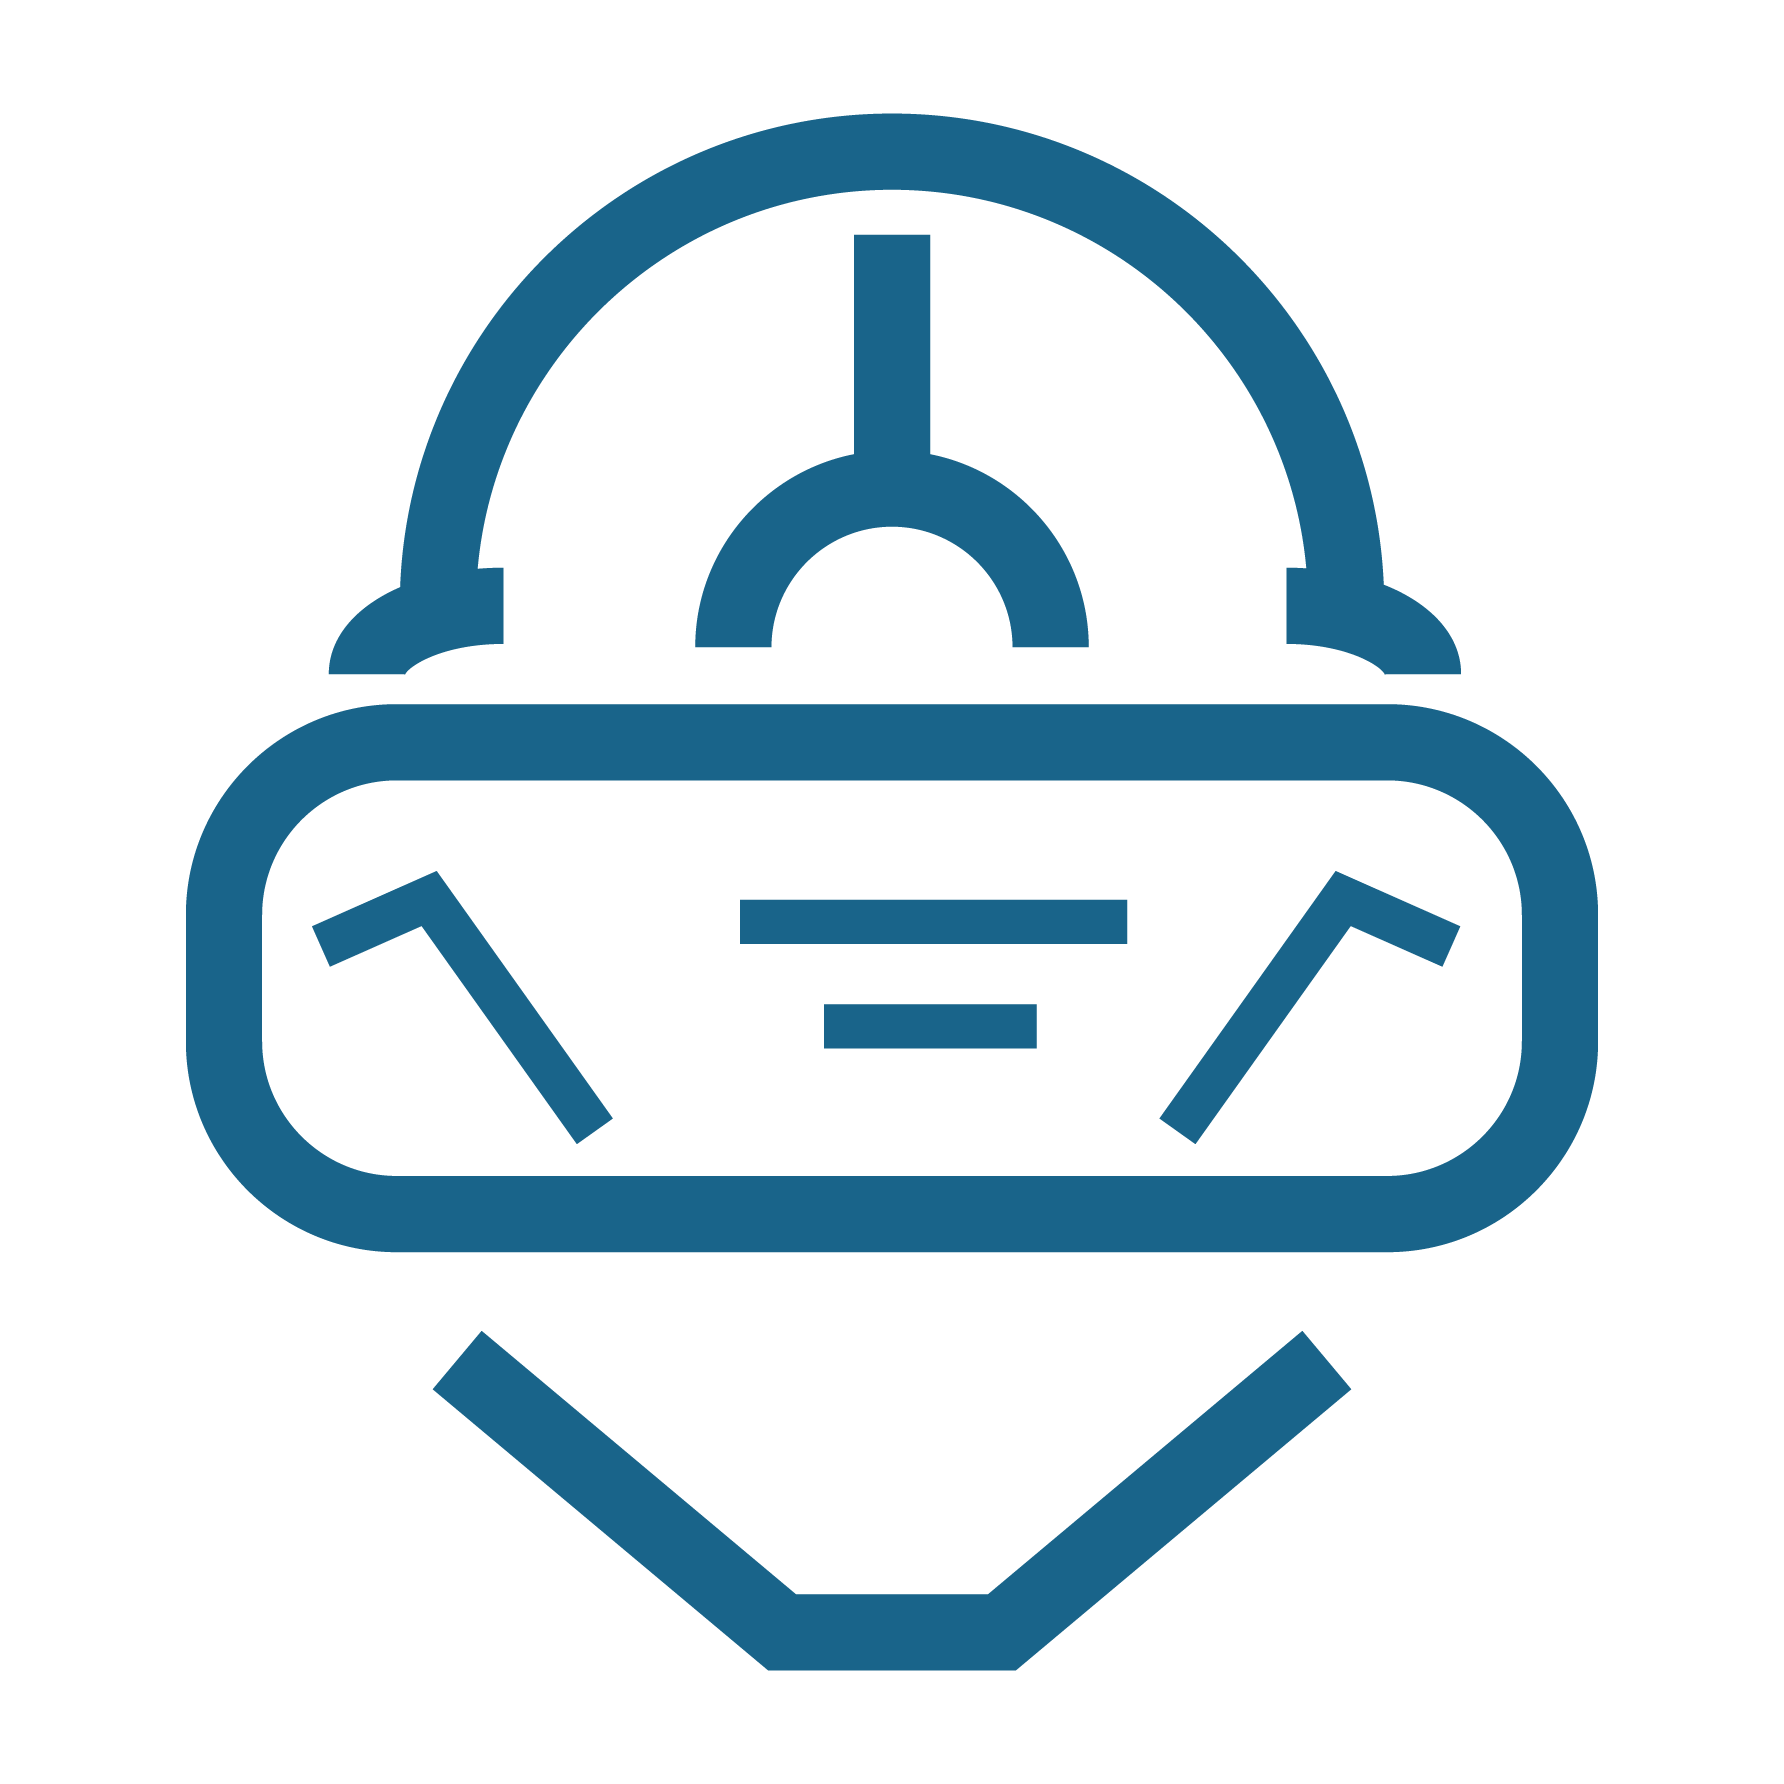 VR Headset Icon